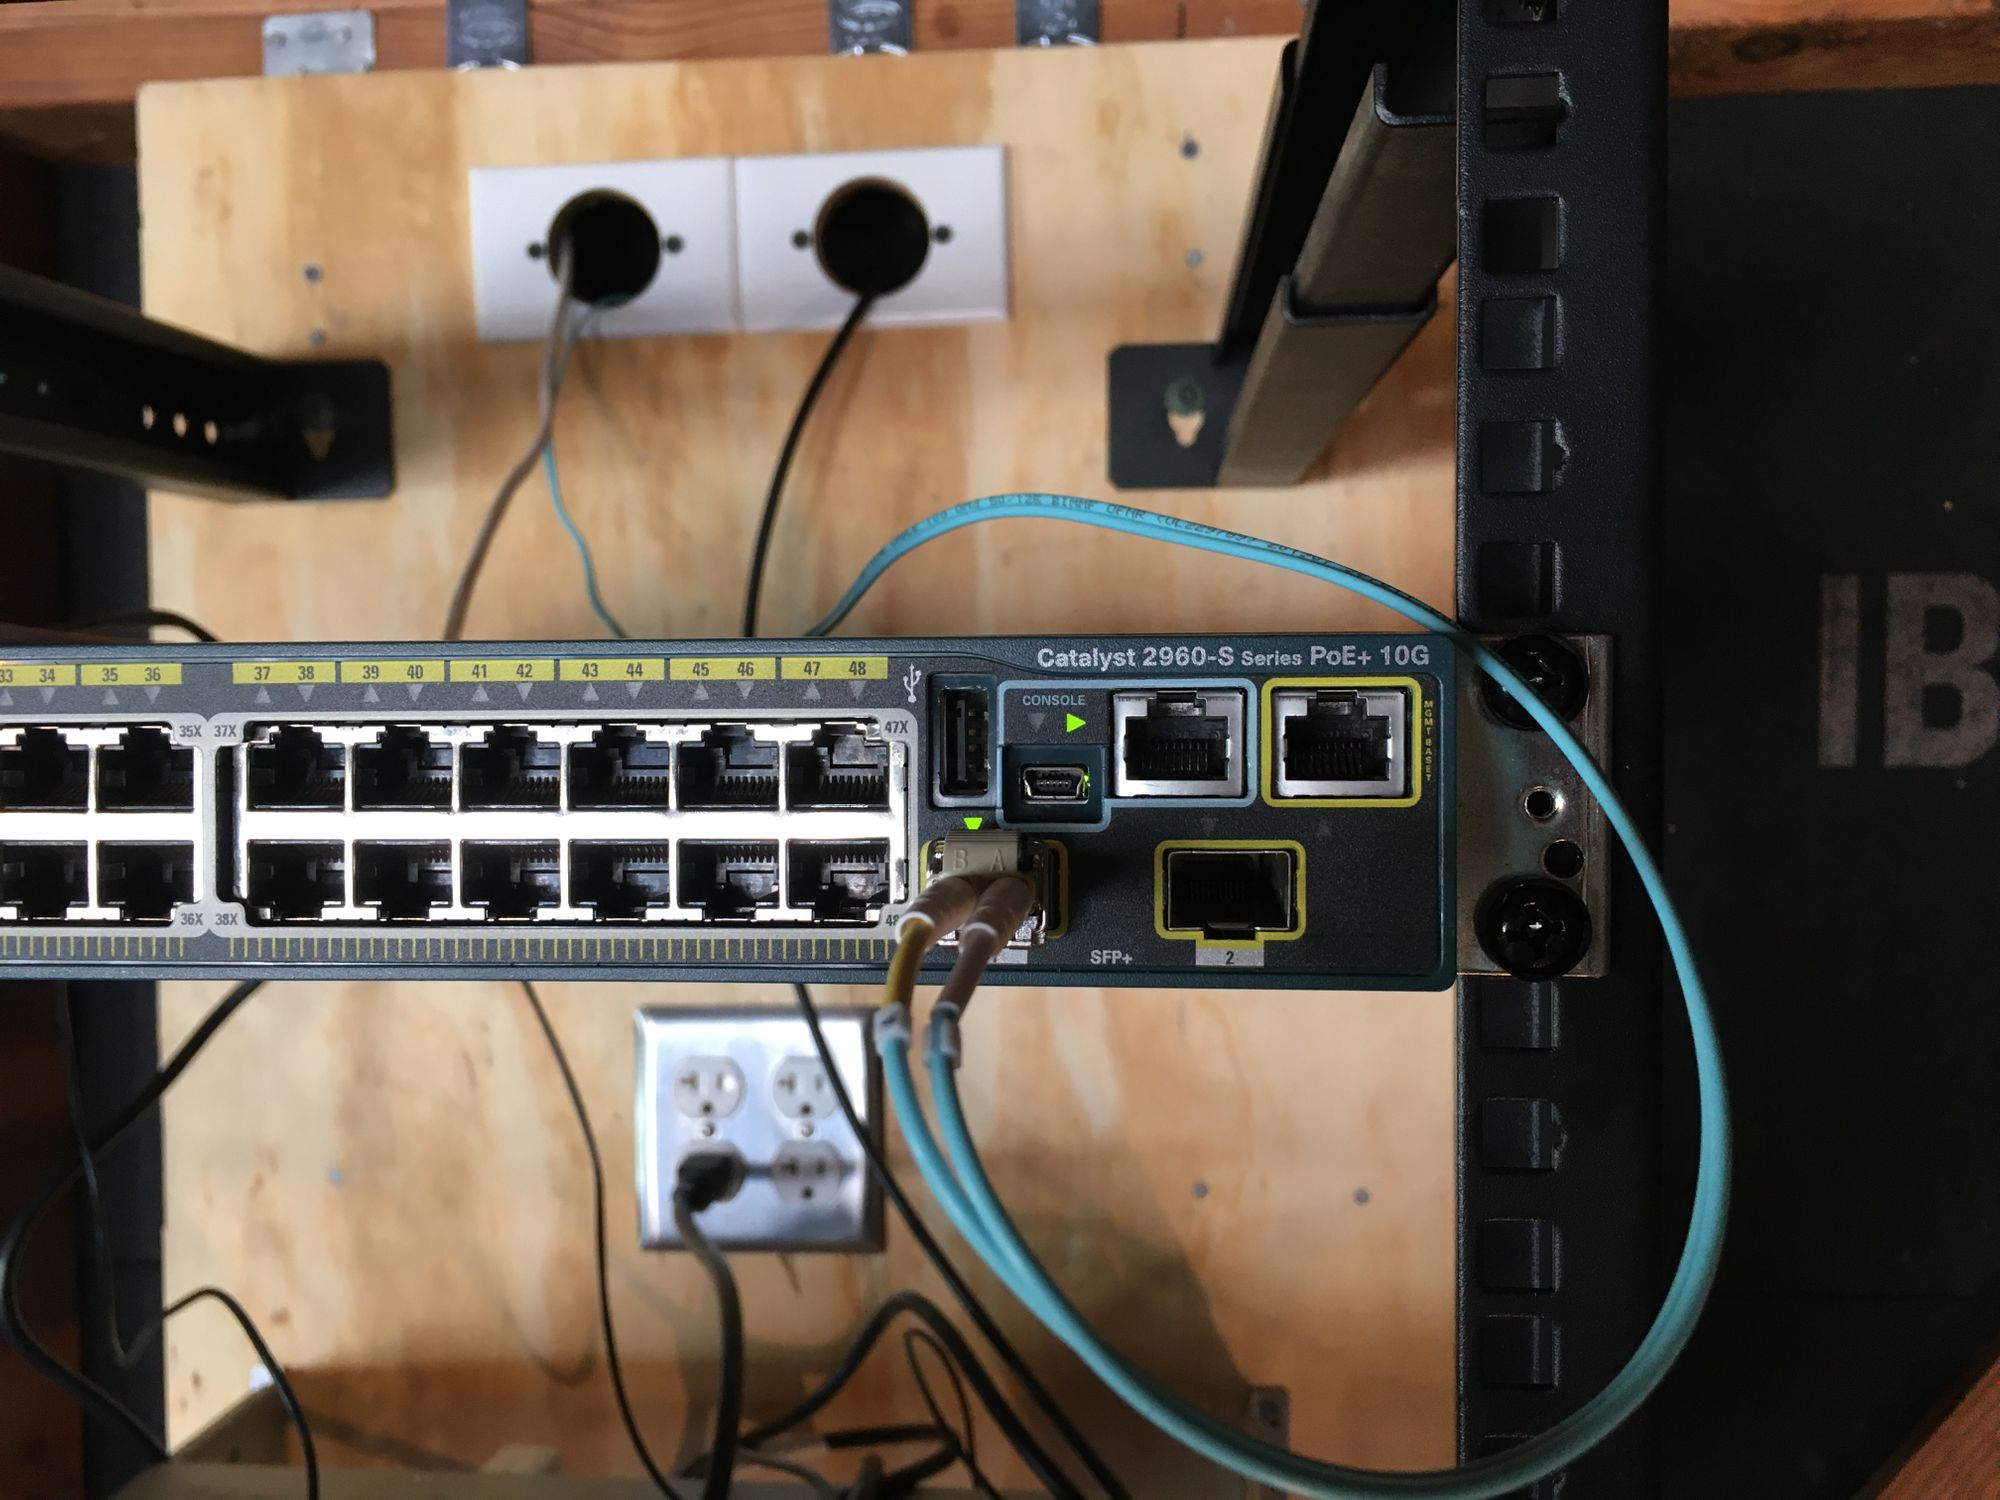 Garage Network Rack with 10G Fiber